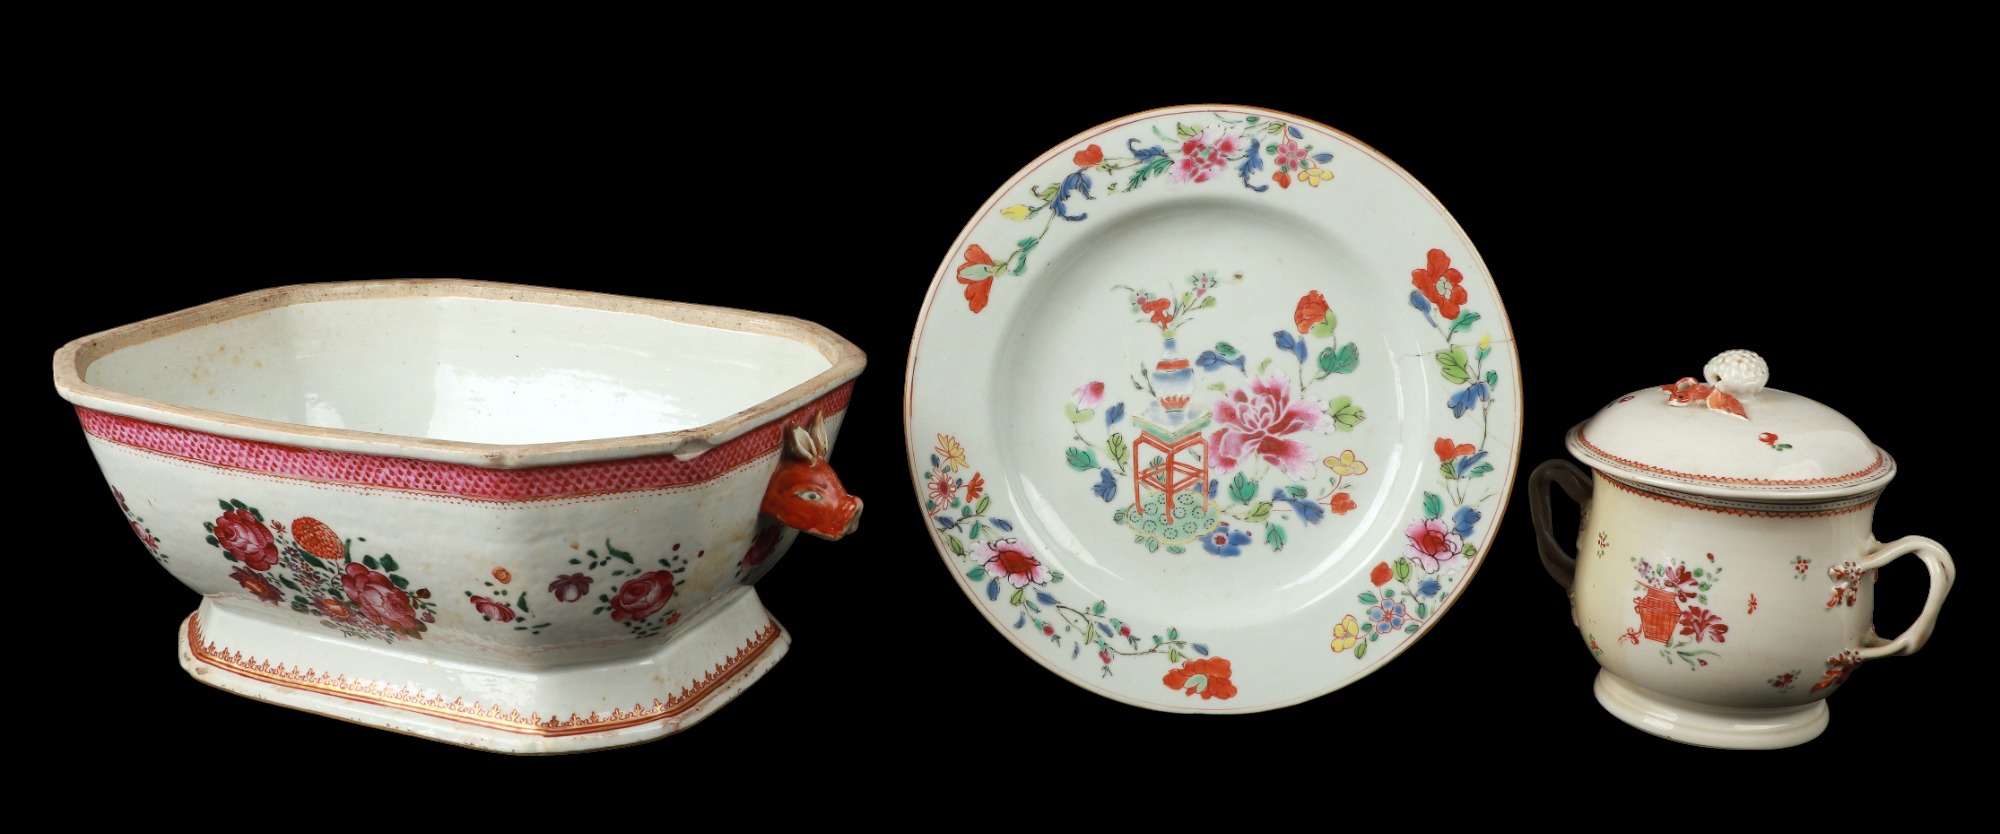  3 Pcs Chinese export porcelain  3ca544